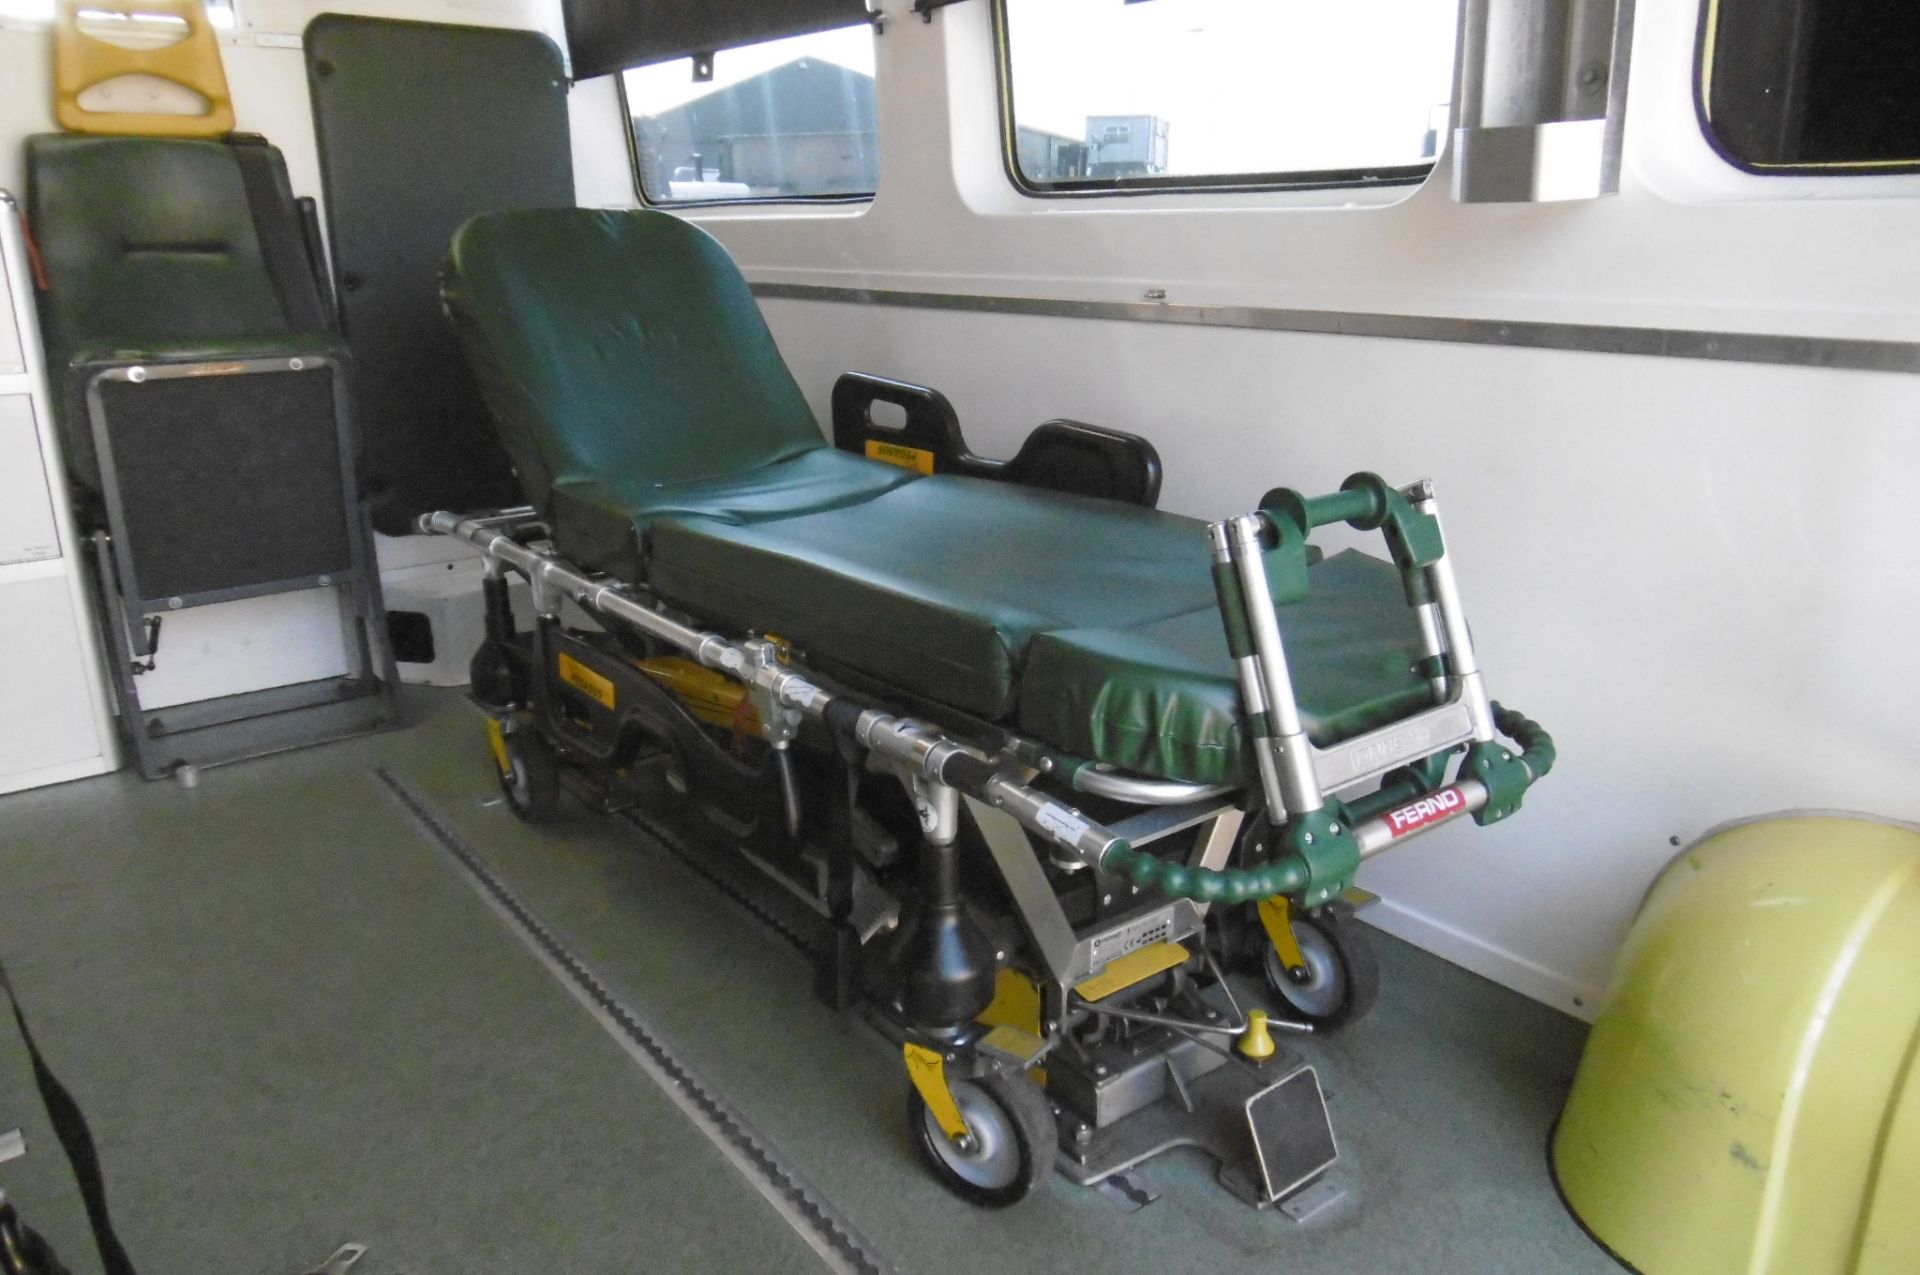 Renault Master 2.5 DCI ambulance - Image 14 of 16